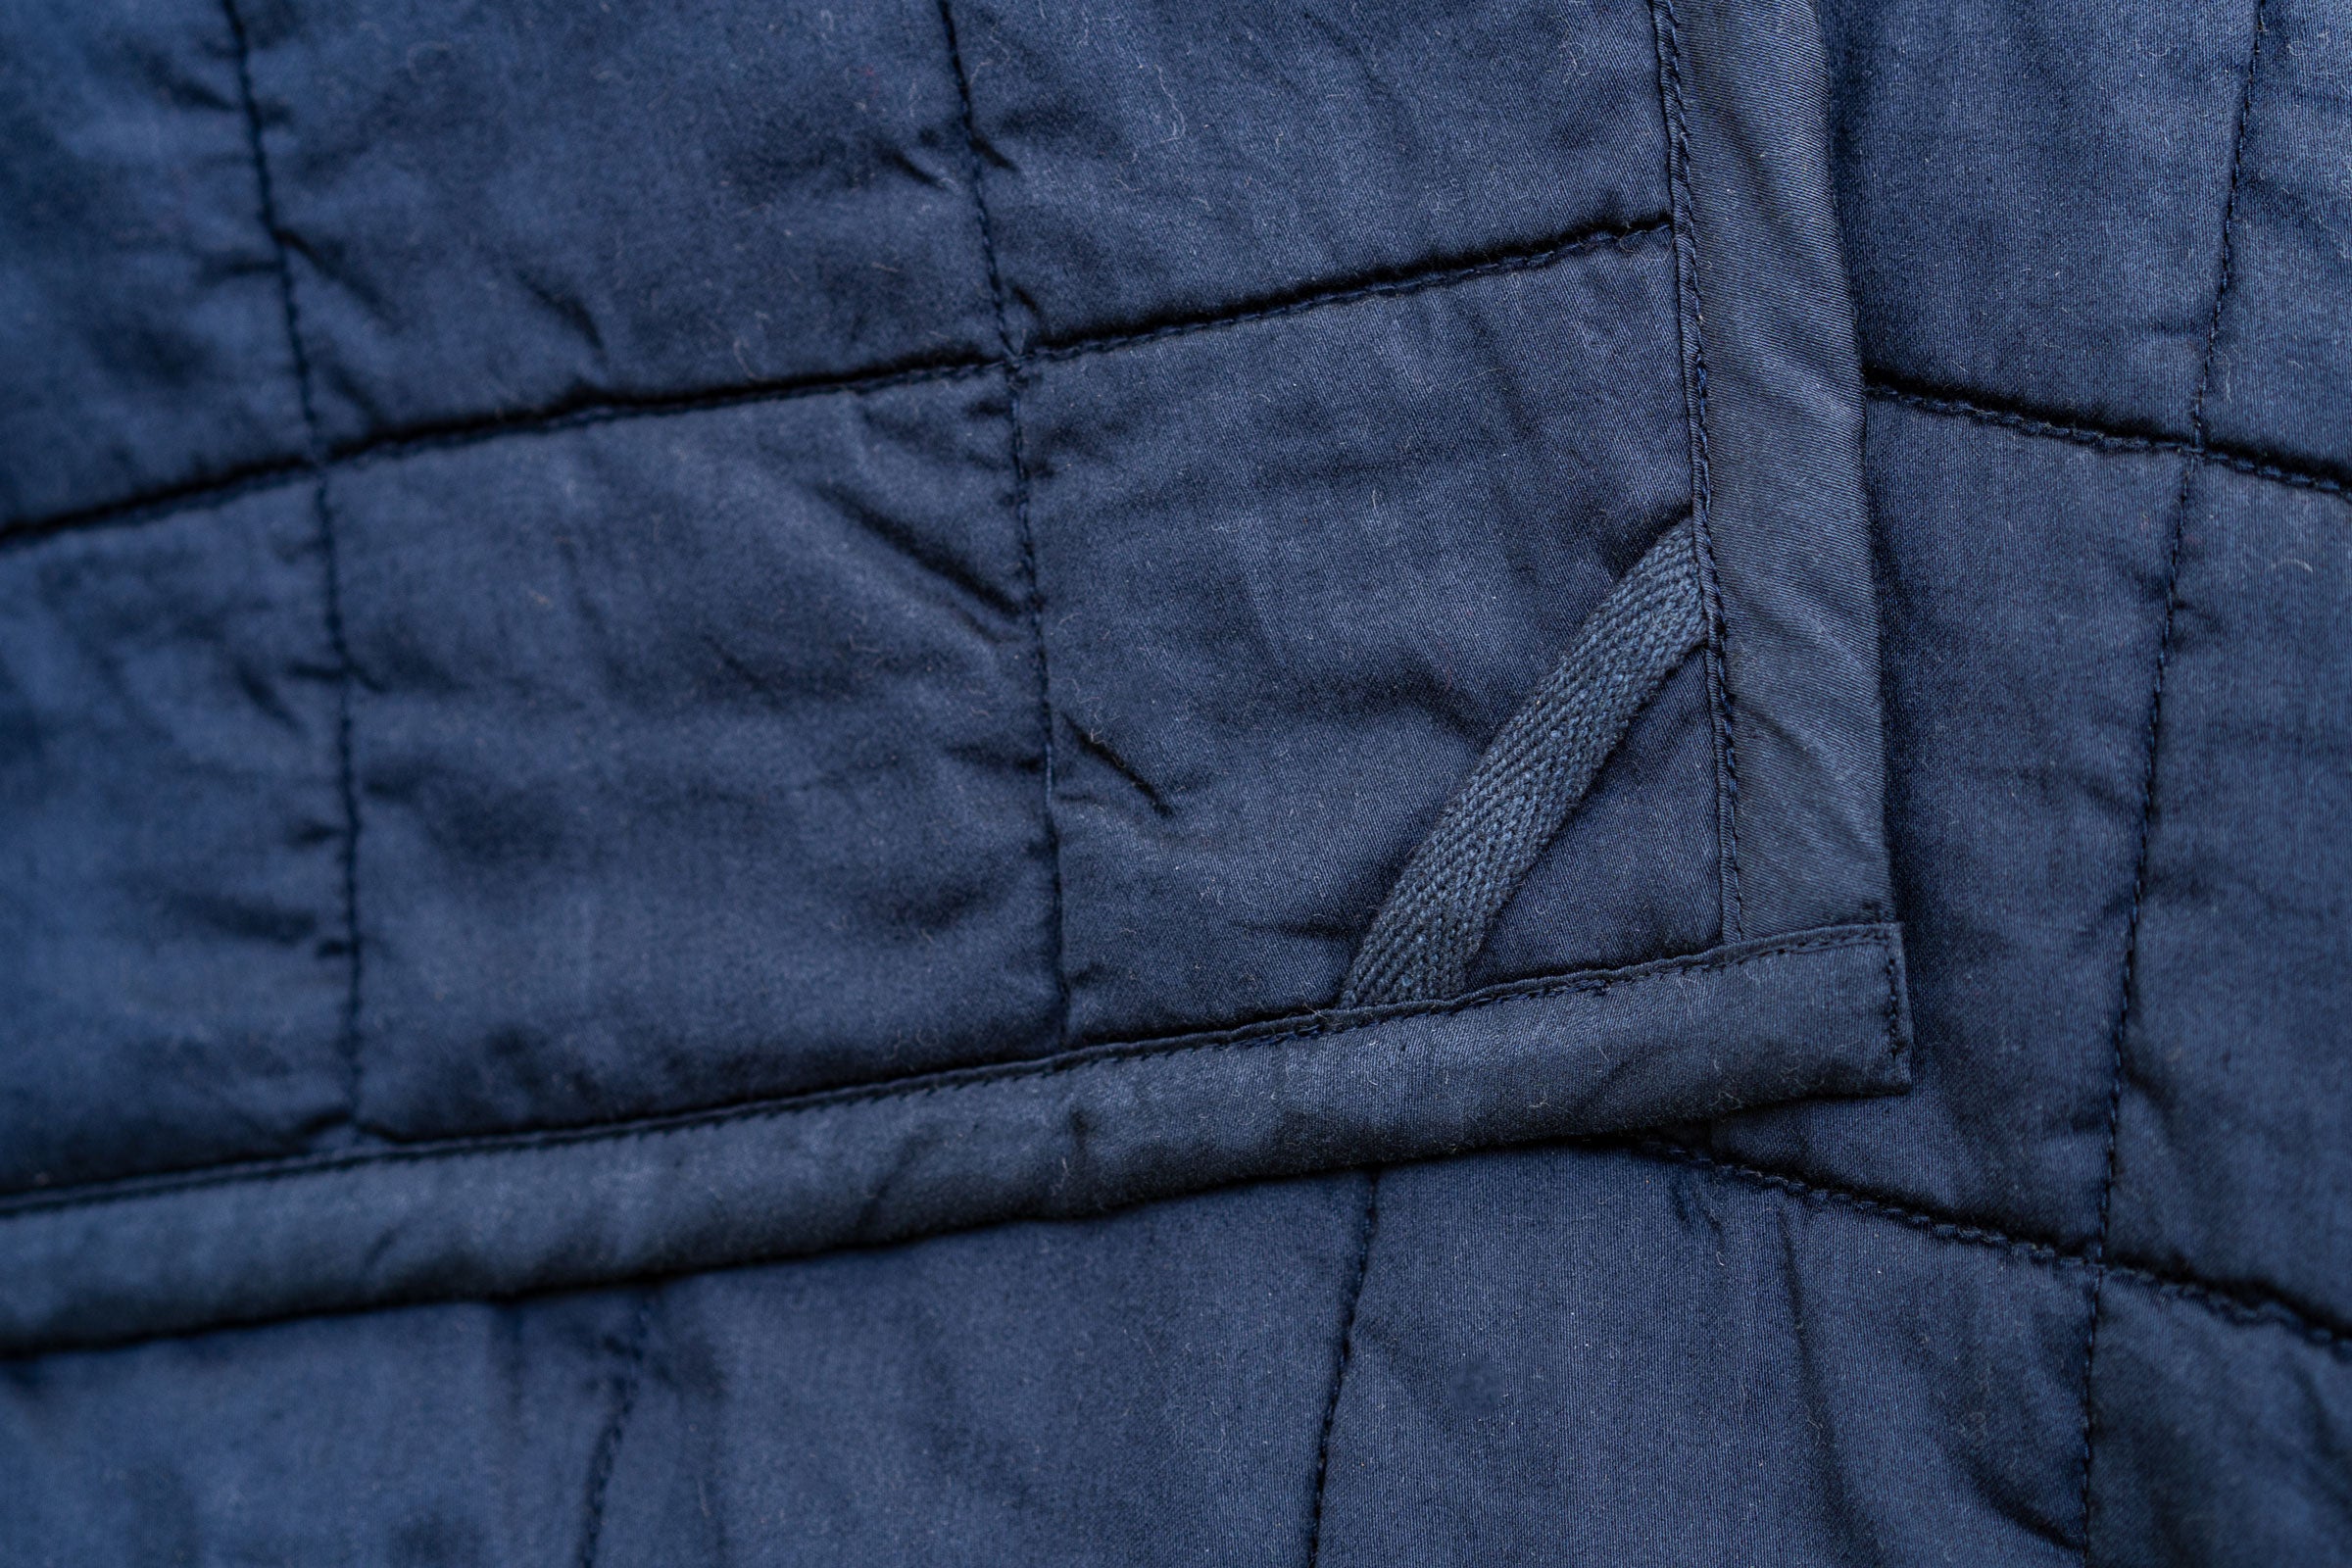 navy-organic-cotton-quilt-close-up-shot-by-sojao.jpg